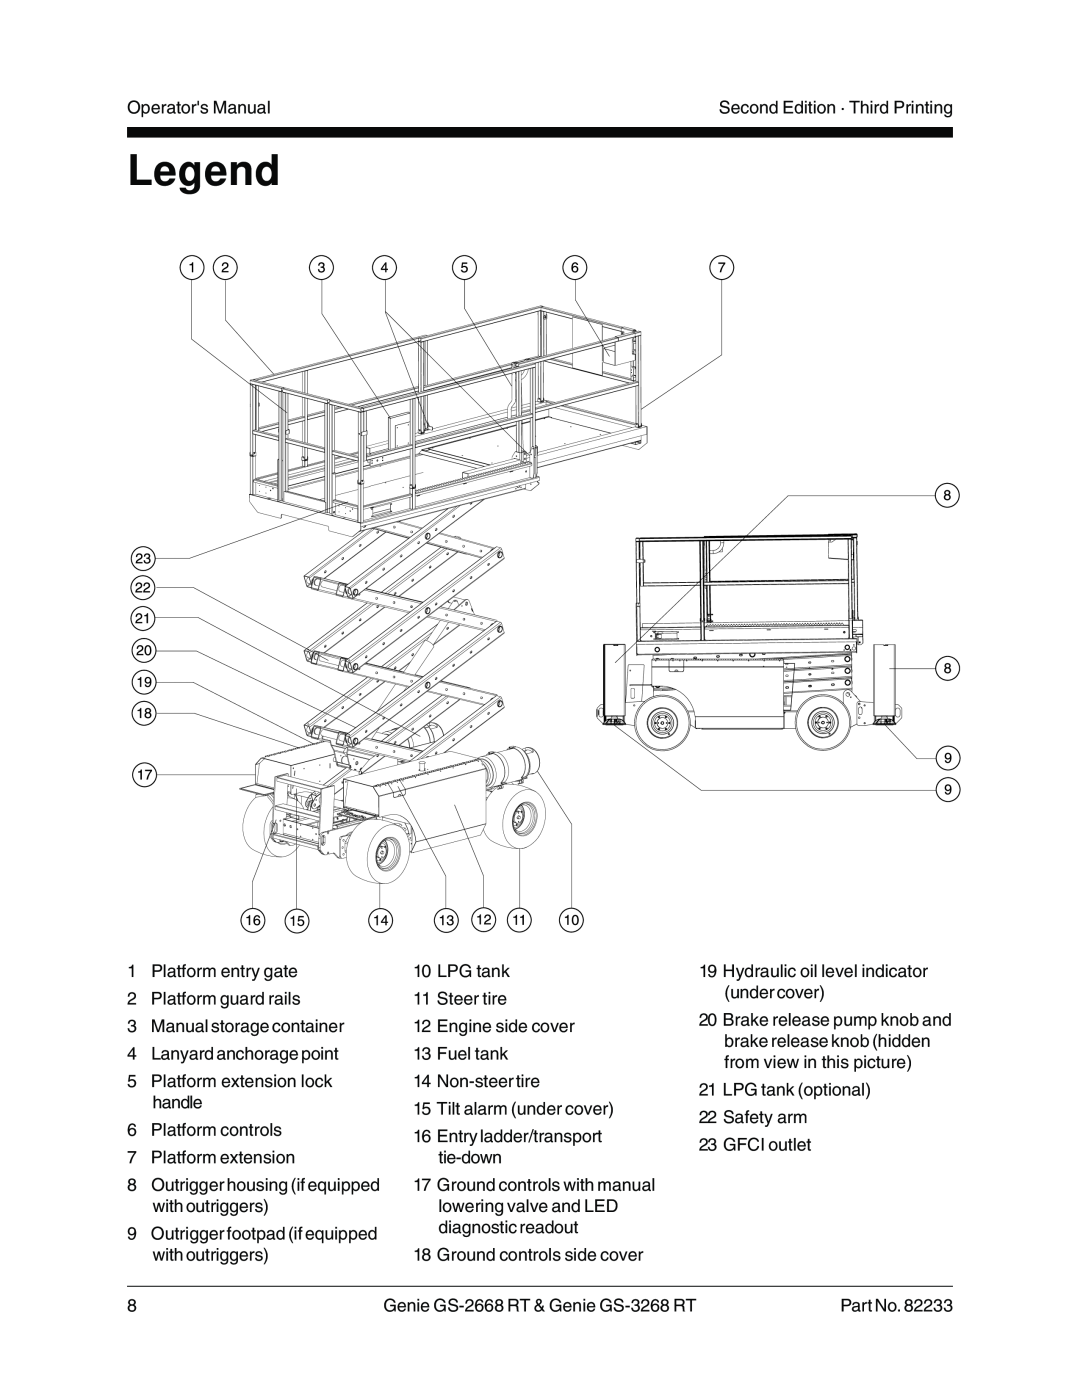 Genie GS-2668 RT Operators Manual, Second Edition · Third Printing, Platform entry gate, LPG tank, Platform guard rails 